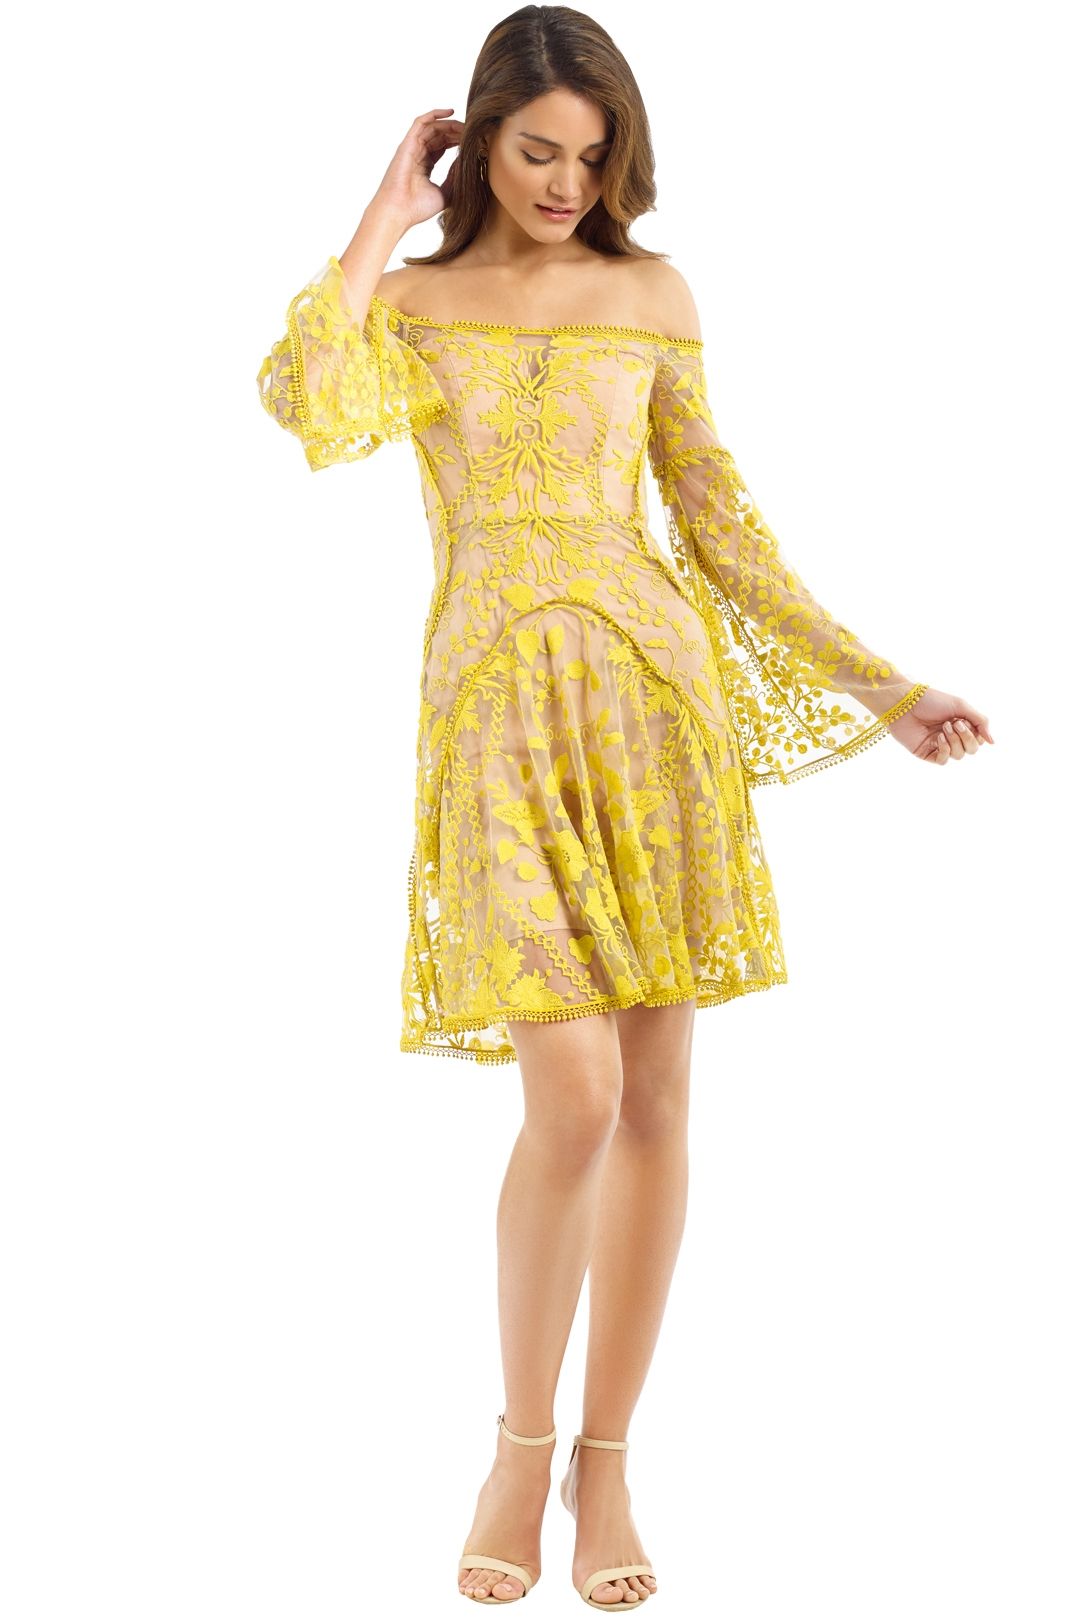 Thurley - Marigold Mini Dress - Yellow - Front